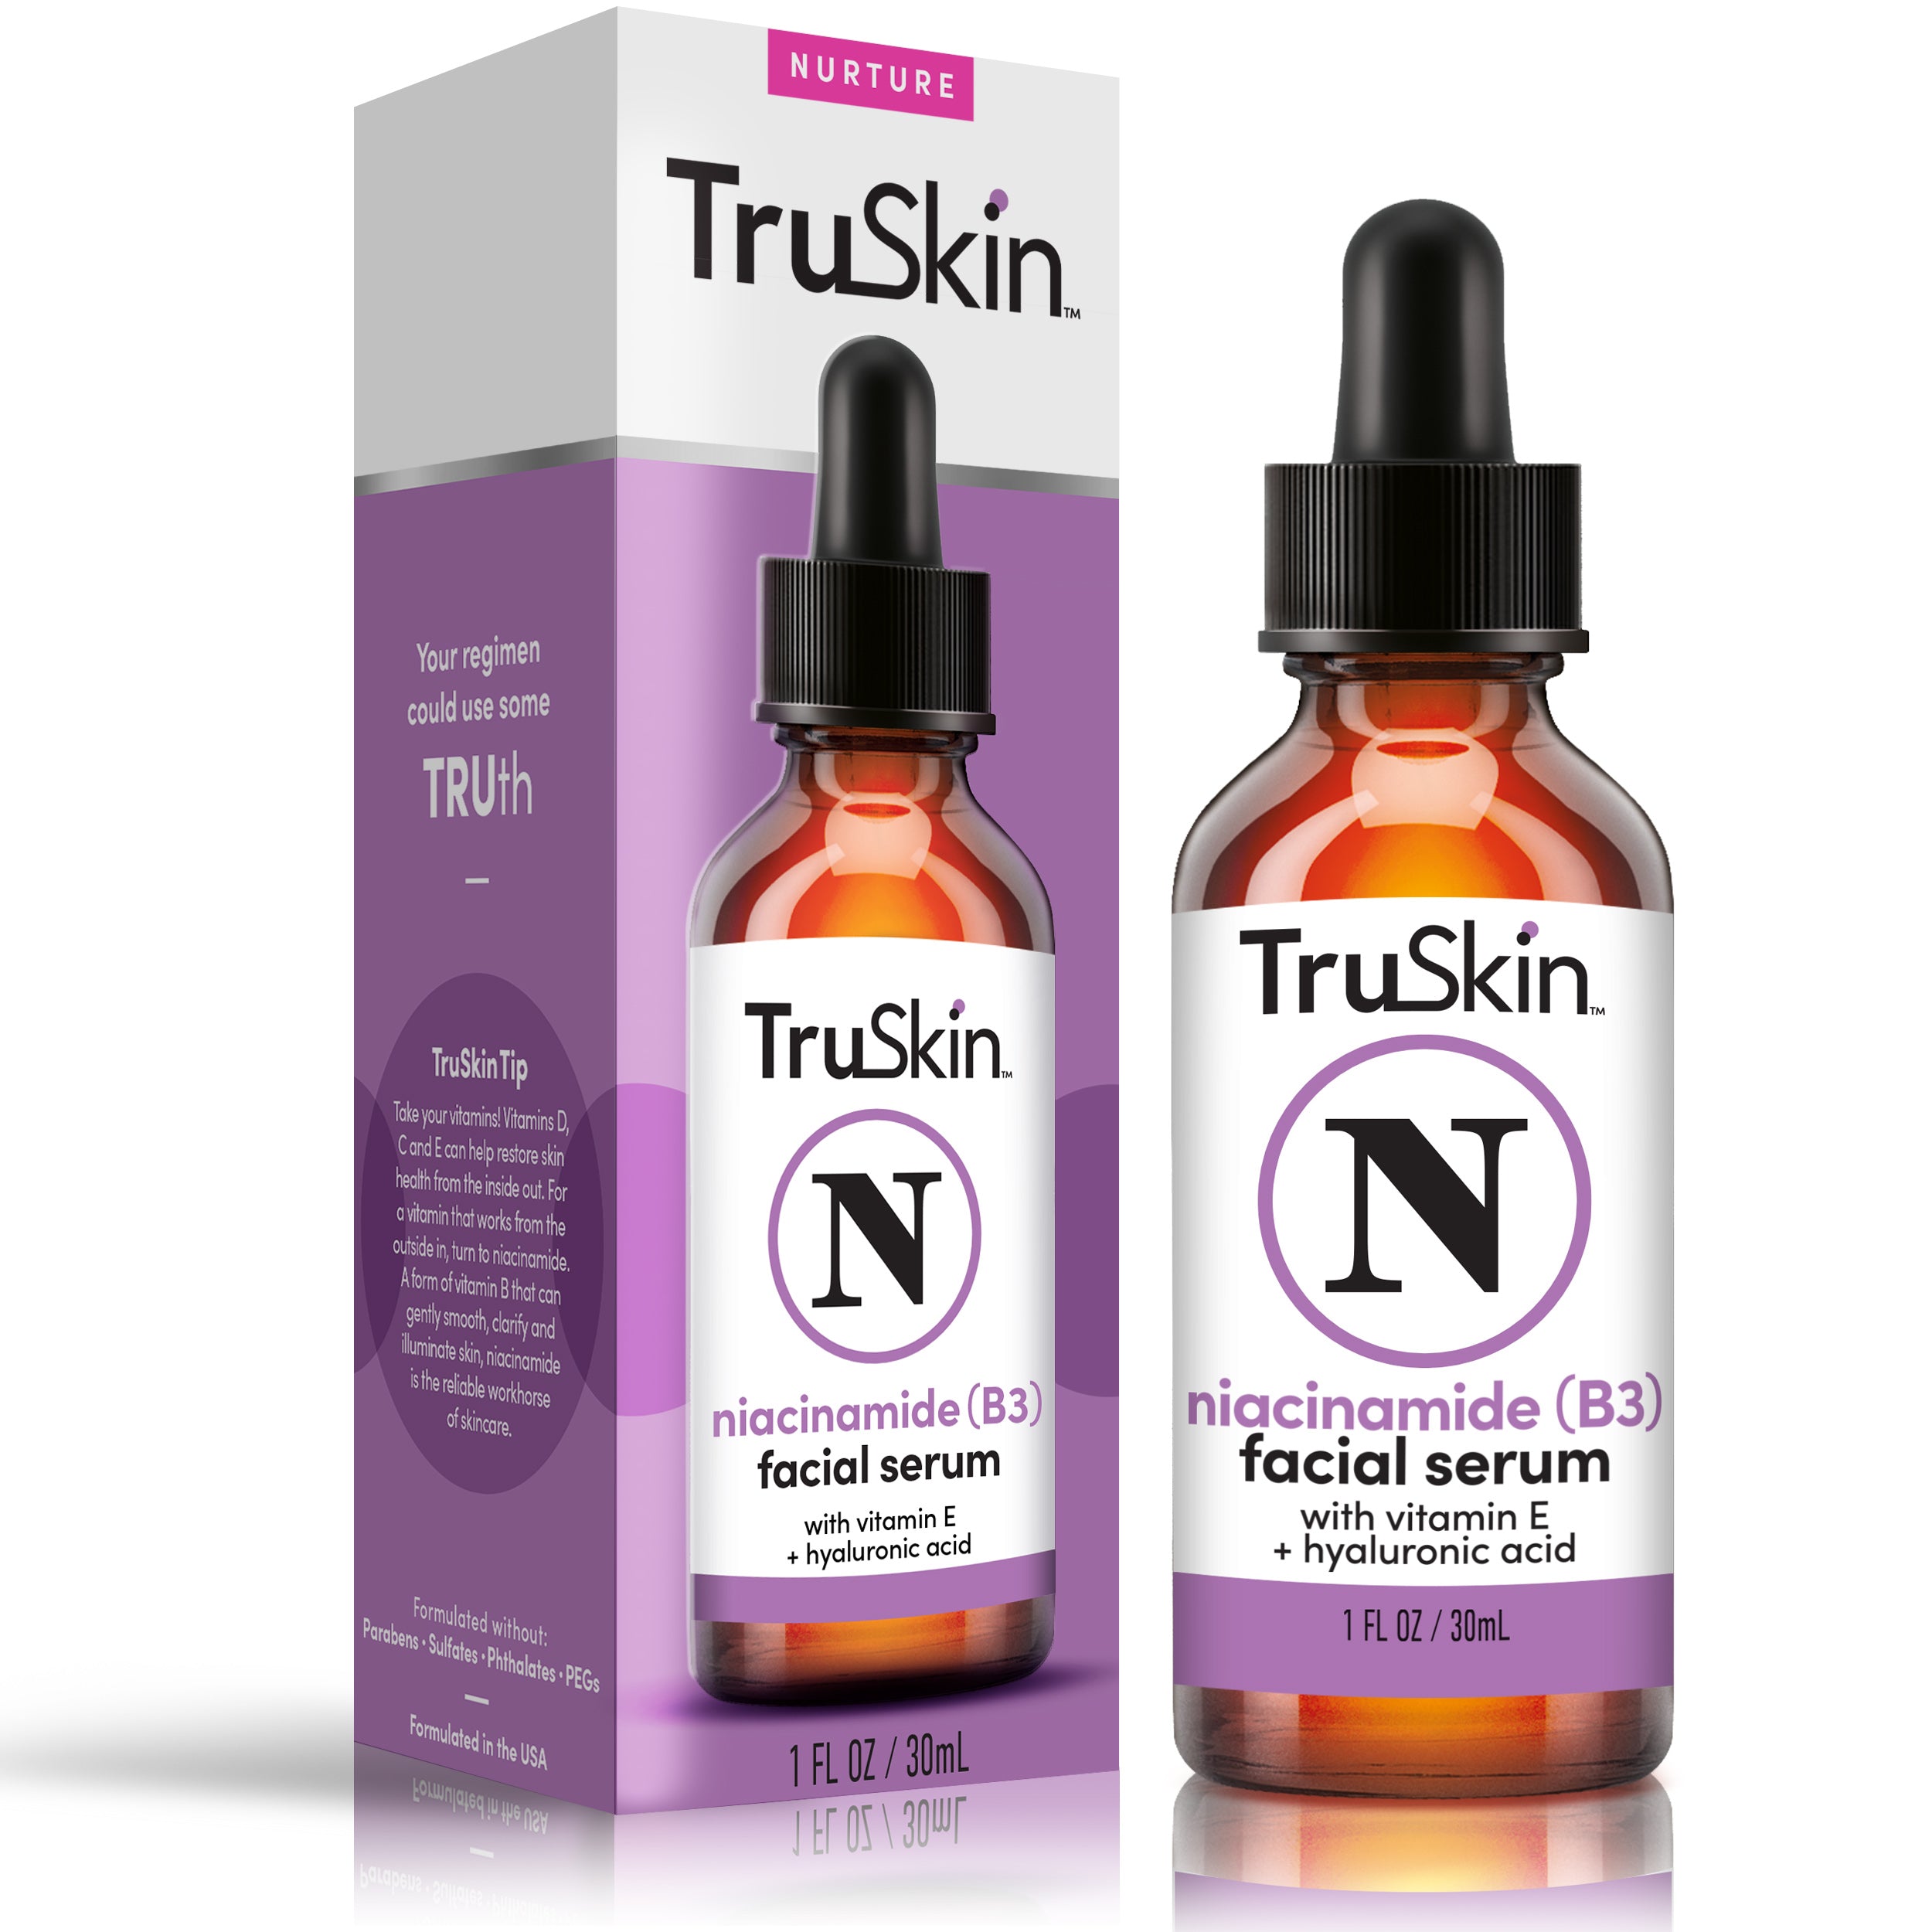 TruSkin Niacinamide (B3) Facial Serum